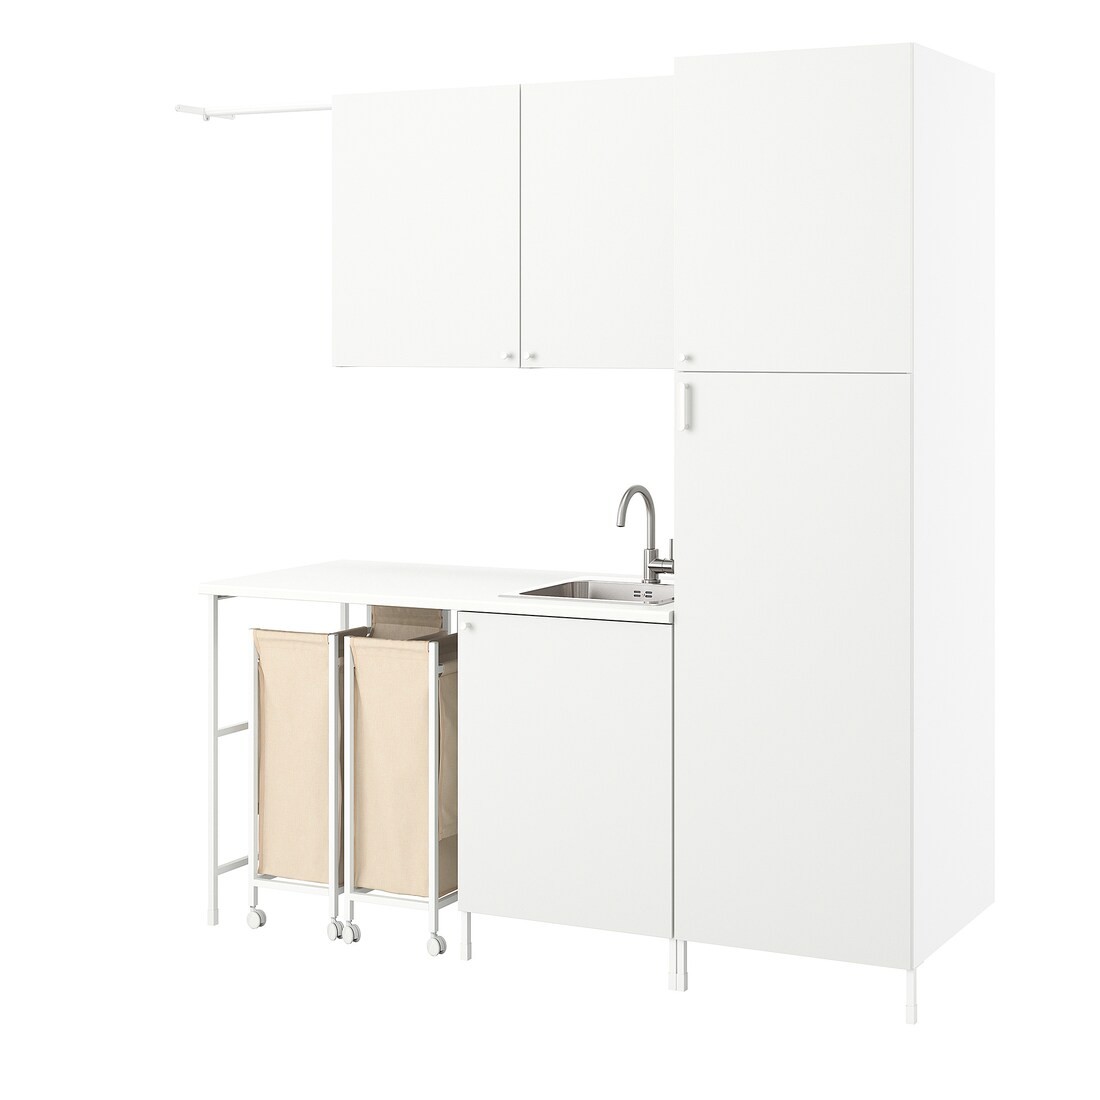 IKEA ENHET ЭНХЕТ Комбинация для хранения для прачечной, белый, 190 х 63,5 х 222,5 см 19477945 | 194.779.45